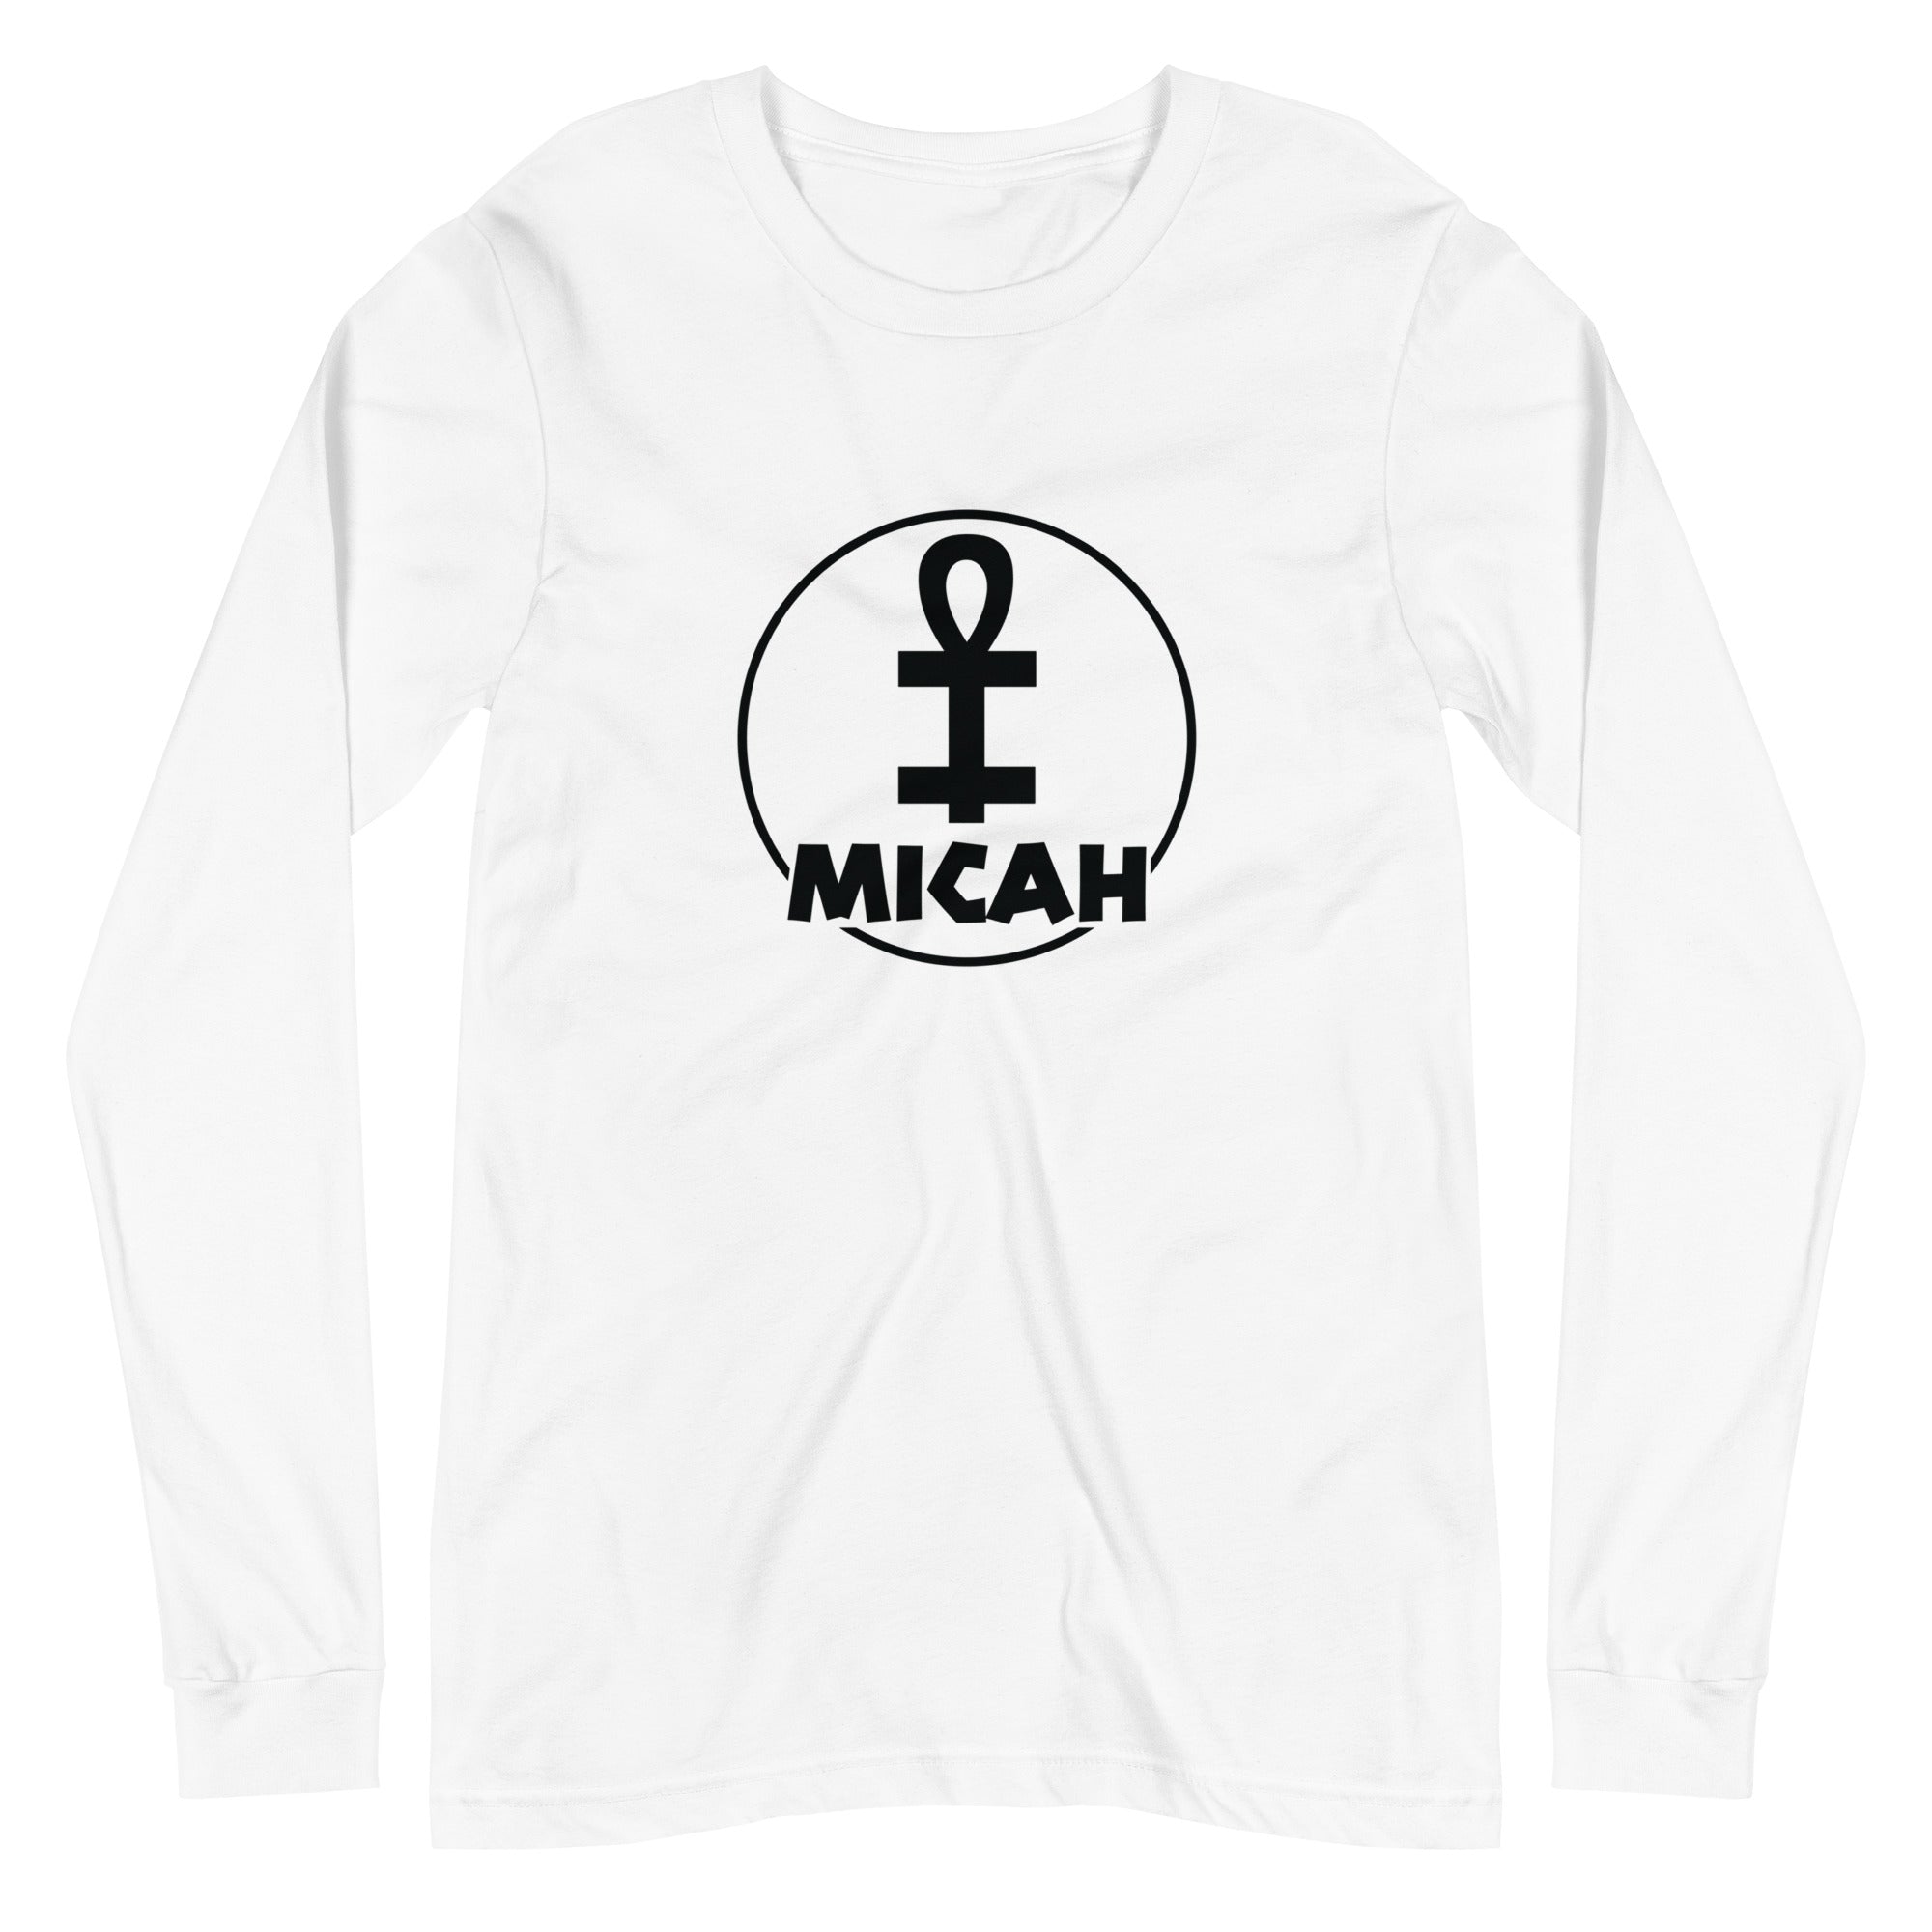 White IX "Micah" Long Sleeve Shirt